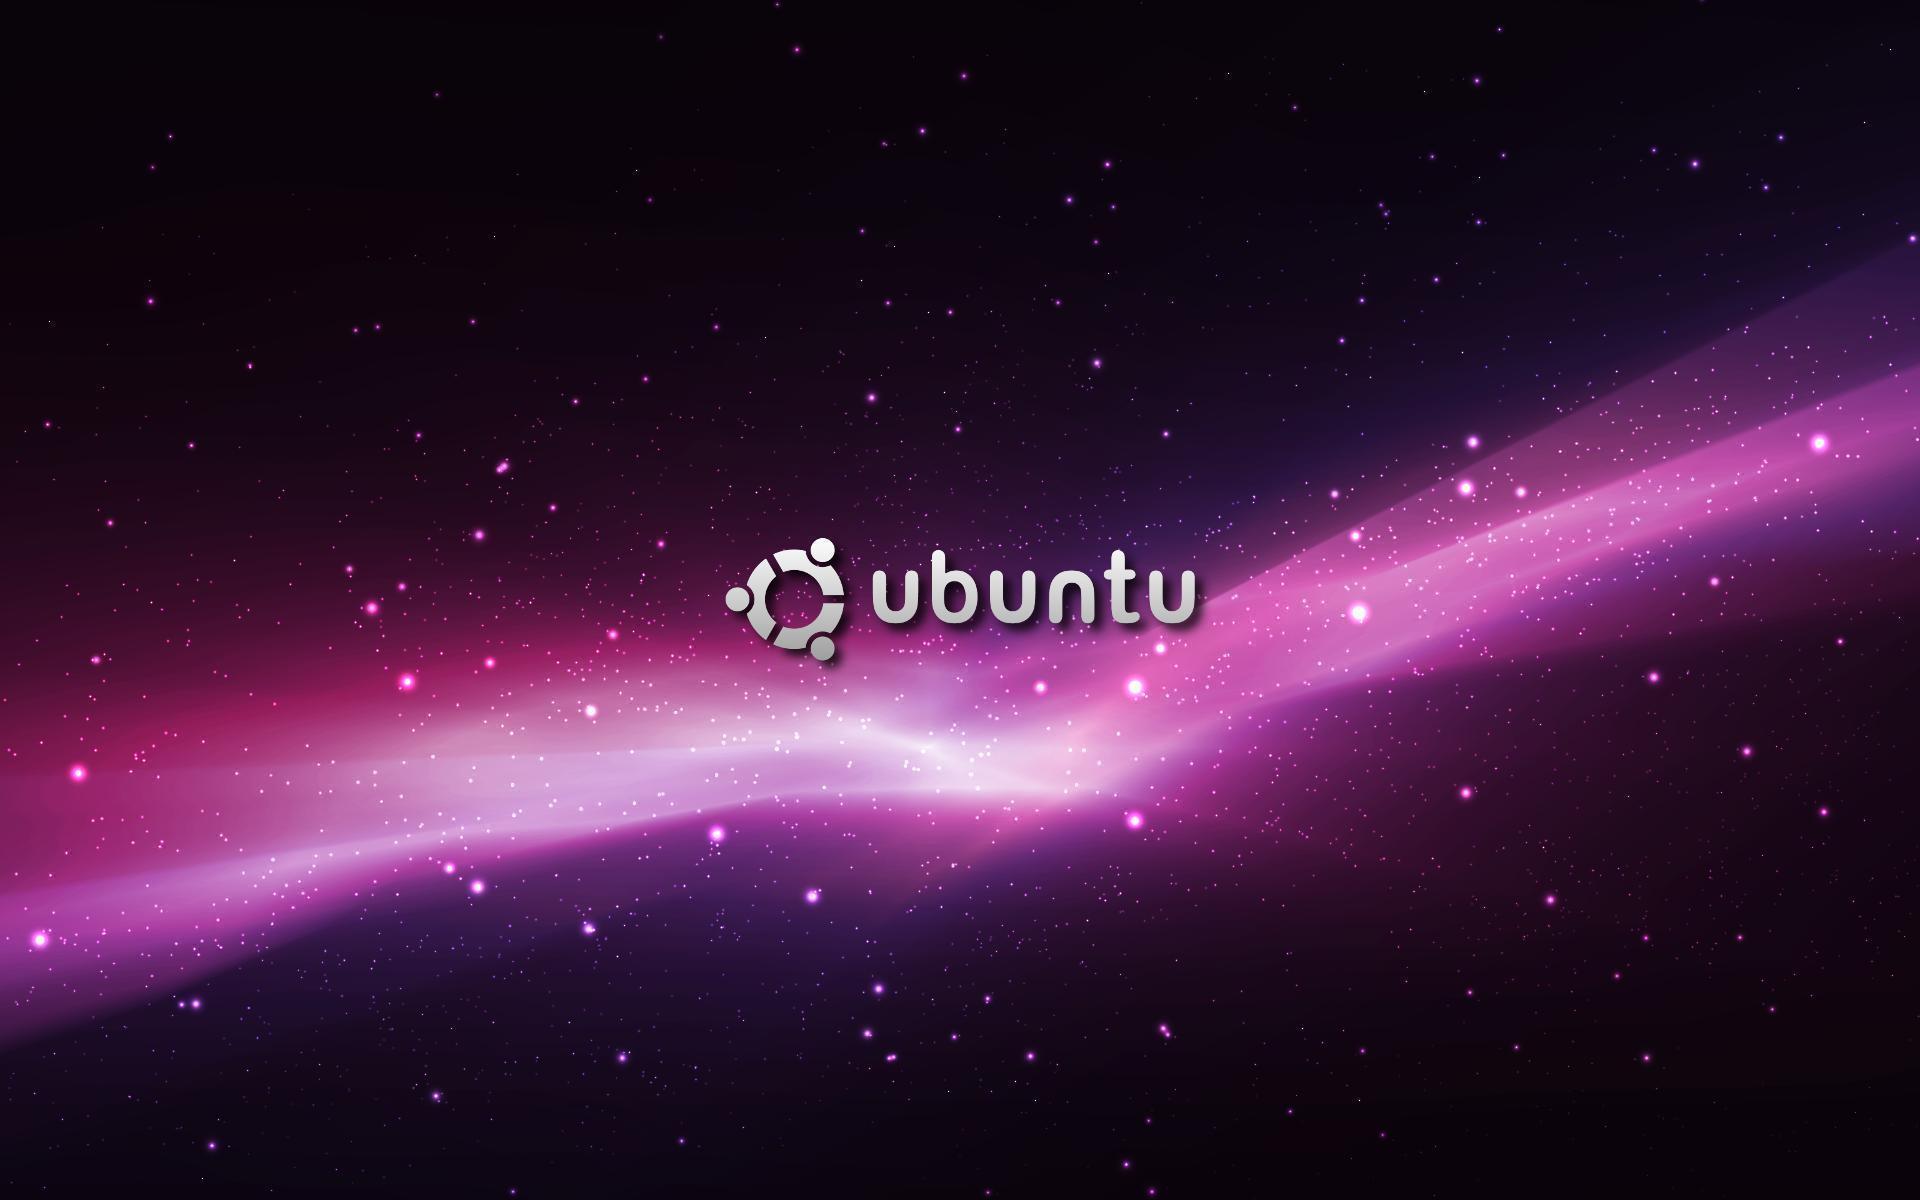 Ubuntu Wallpaper Location Unbuntu